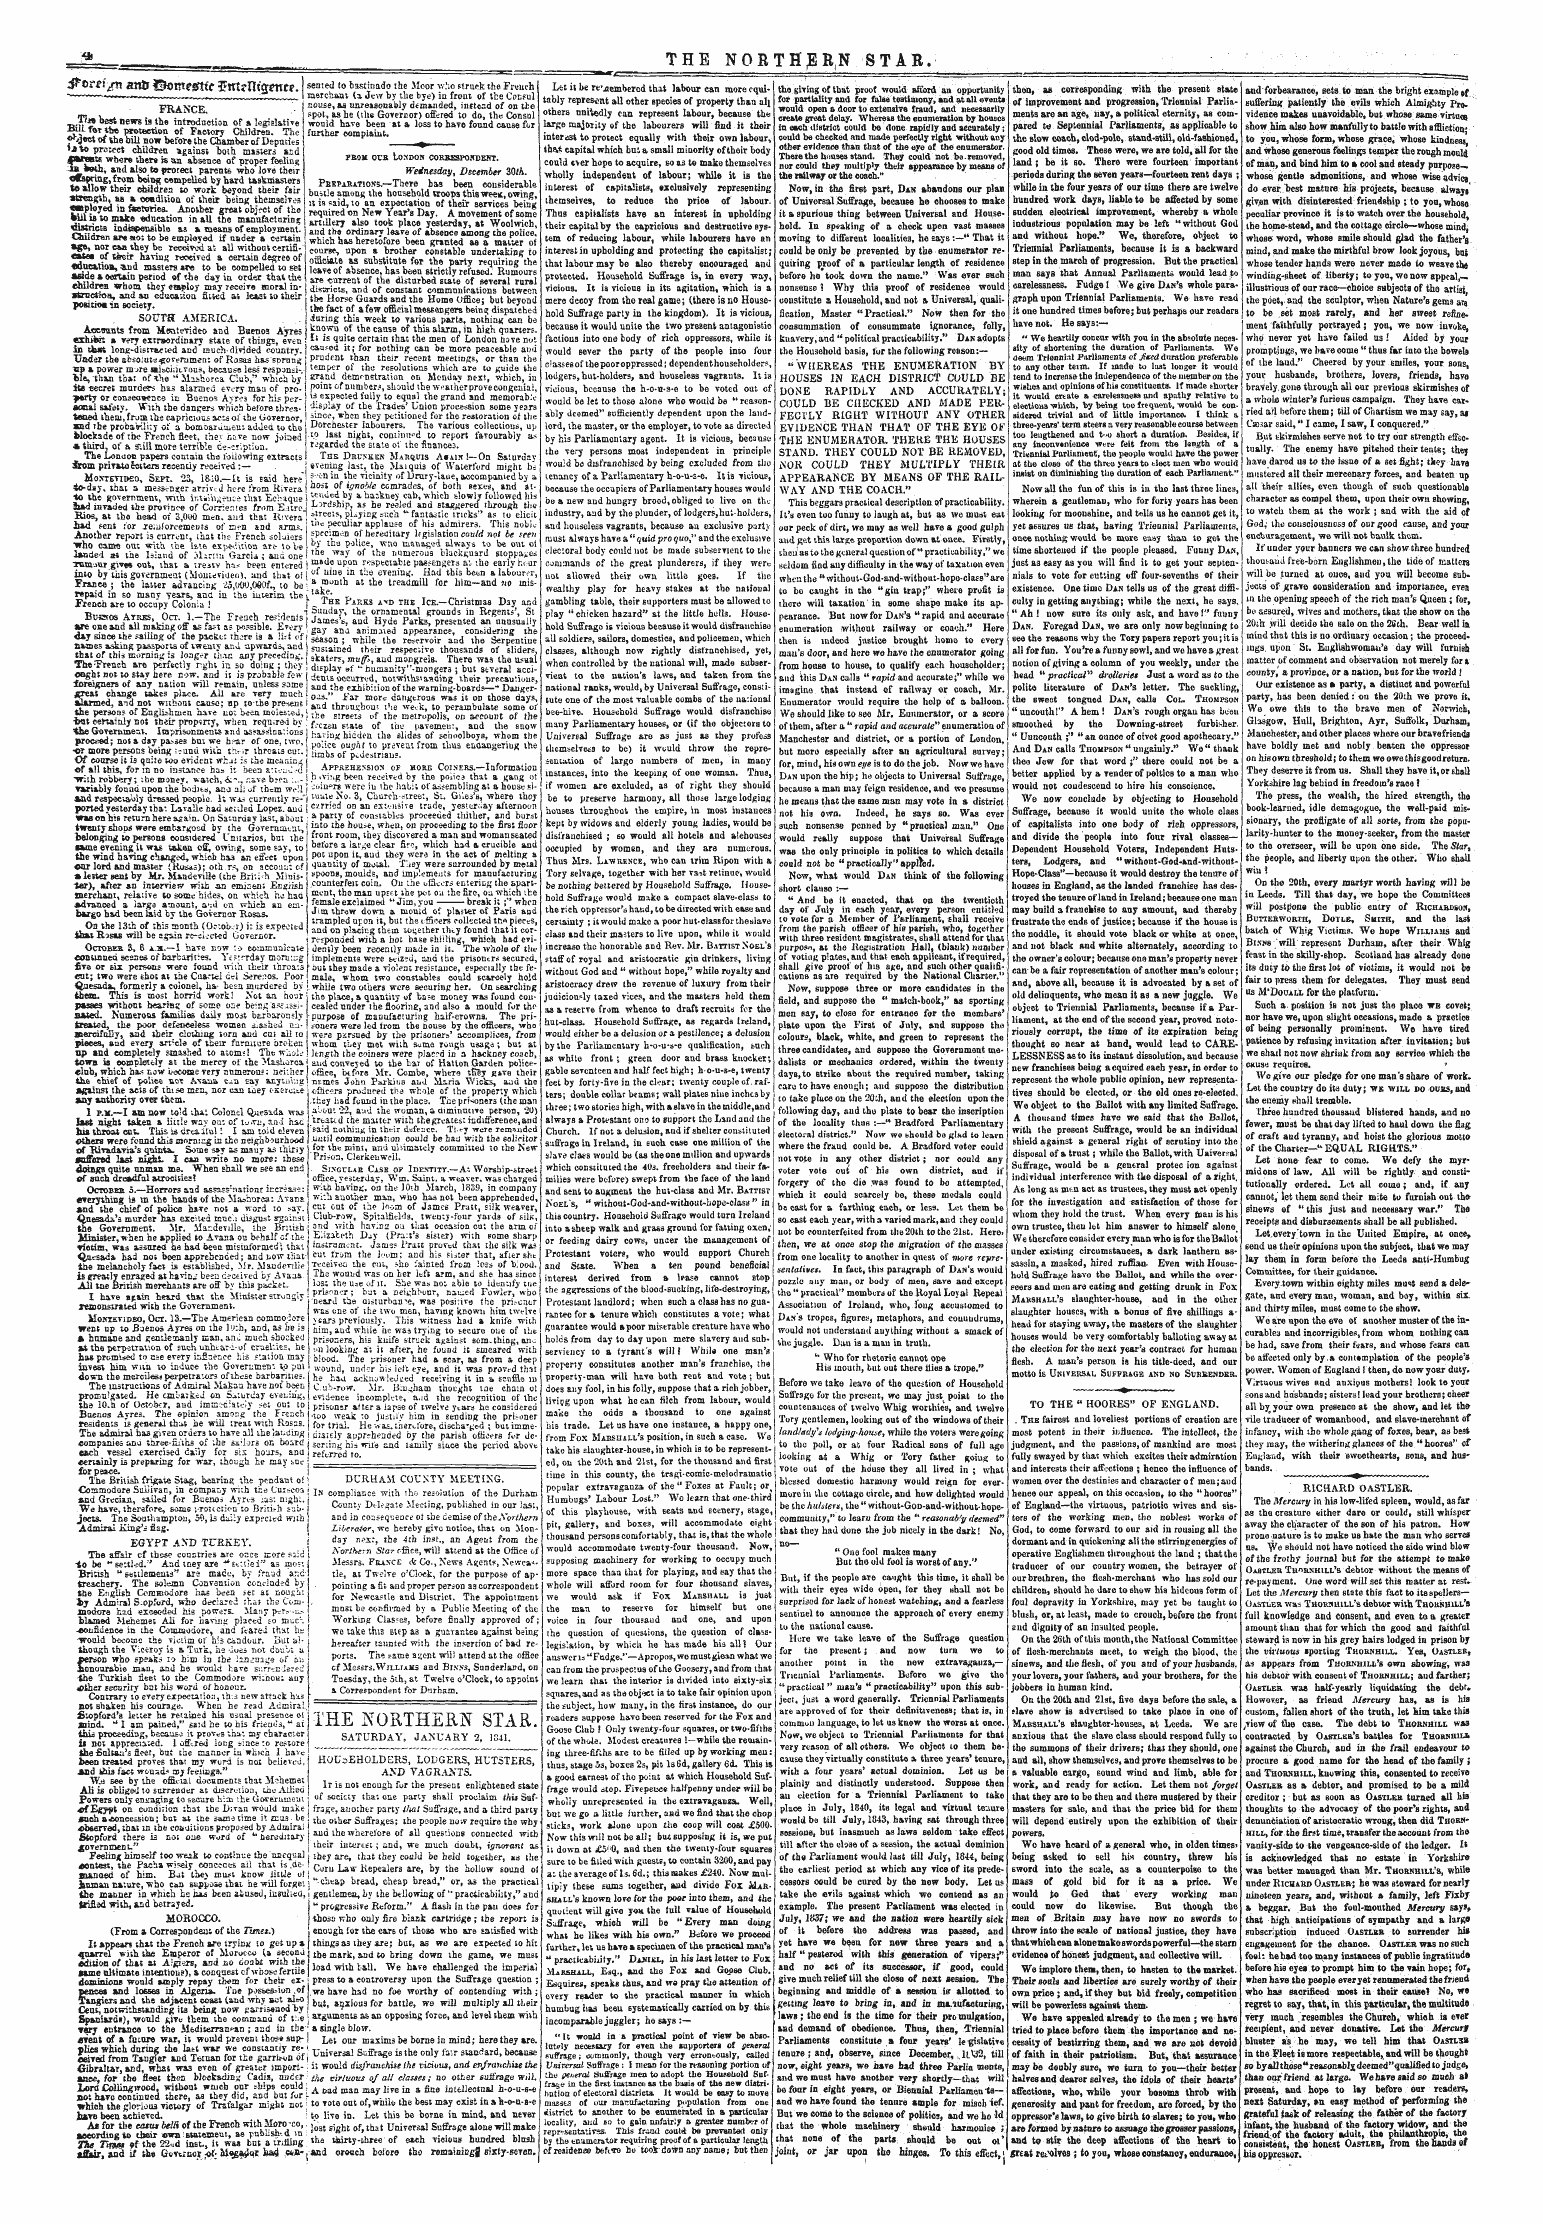 Northern Star (1837-1852): jS F Y, 2nd edition - The Jn T Okthek]S T Star. Saturday, January 2, 1841.